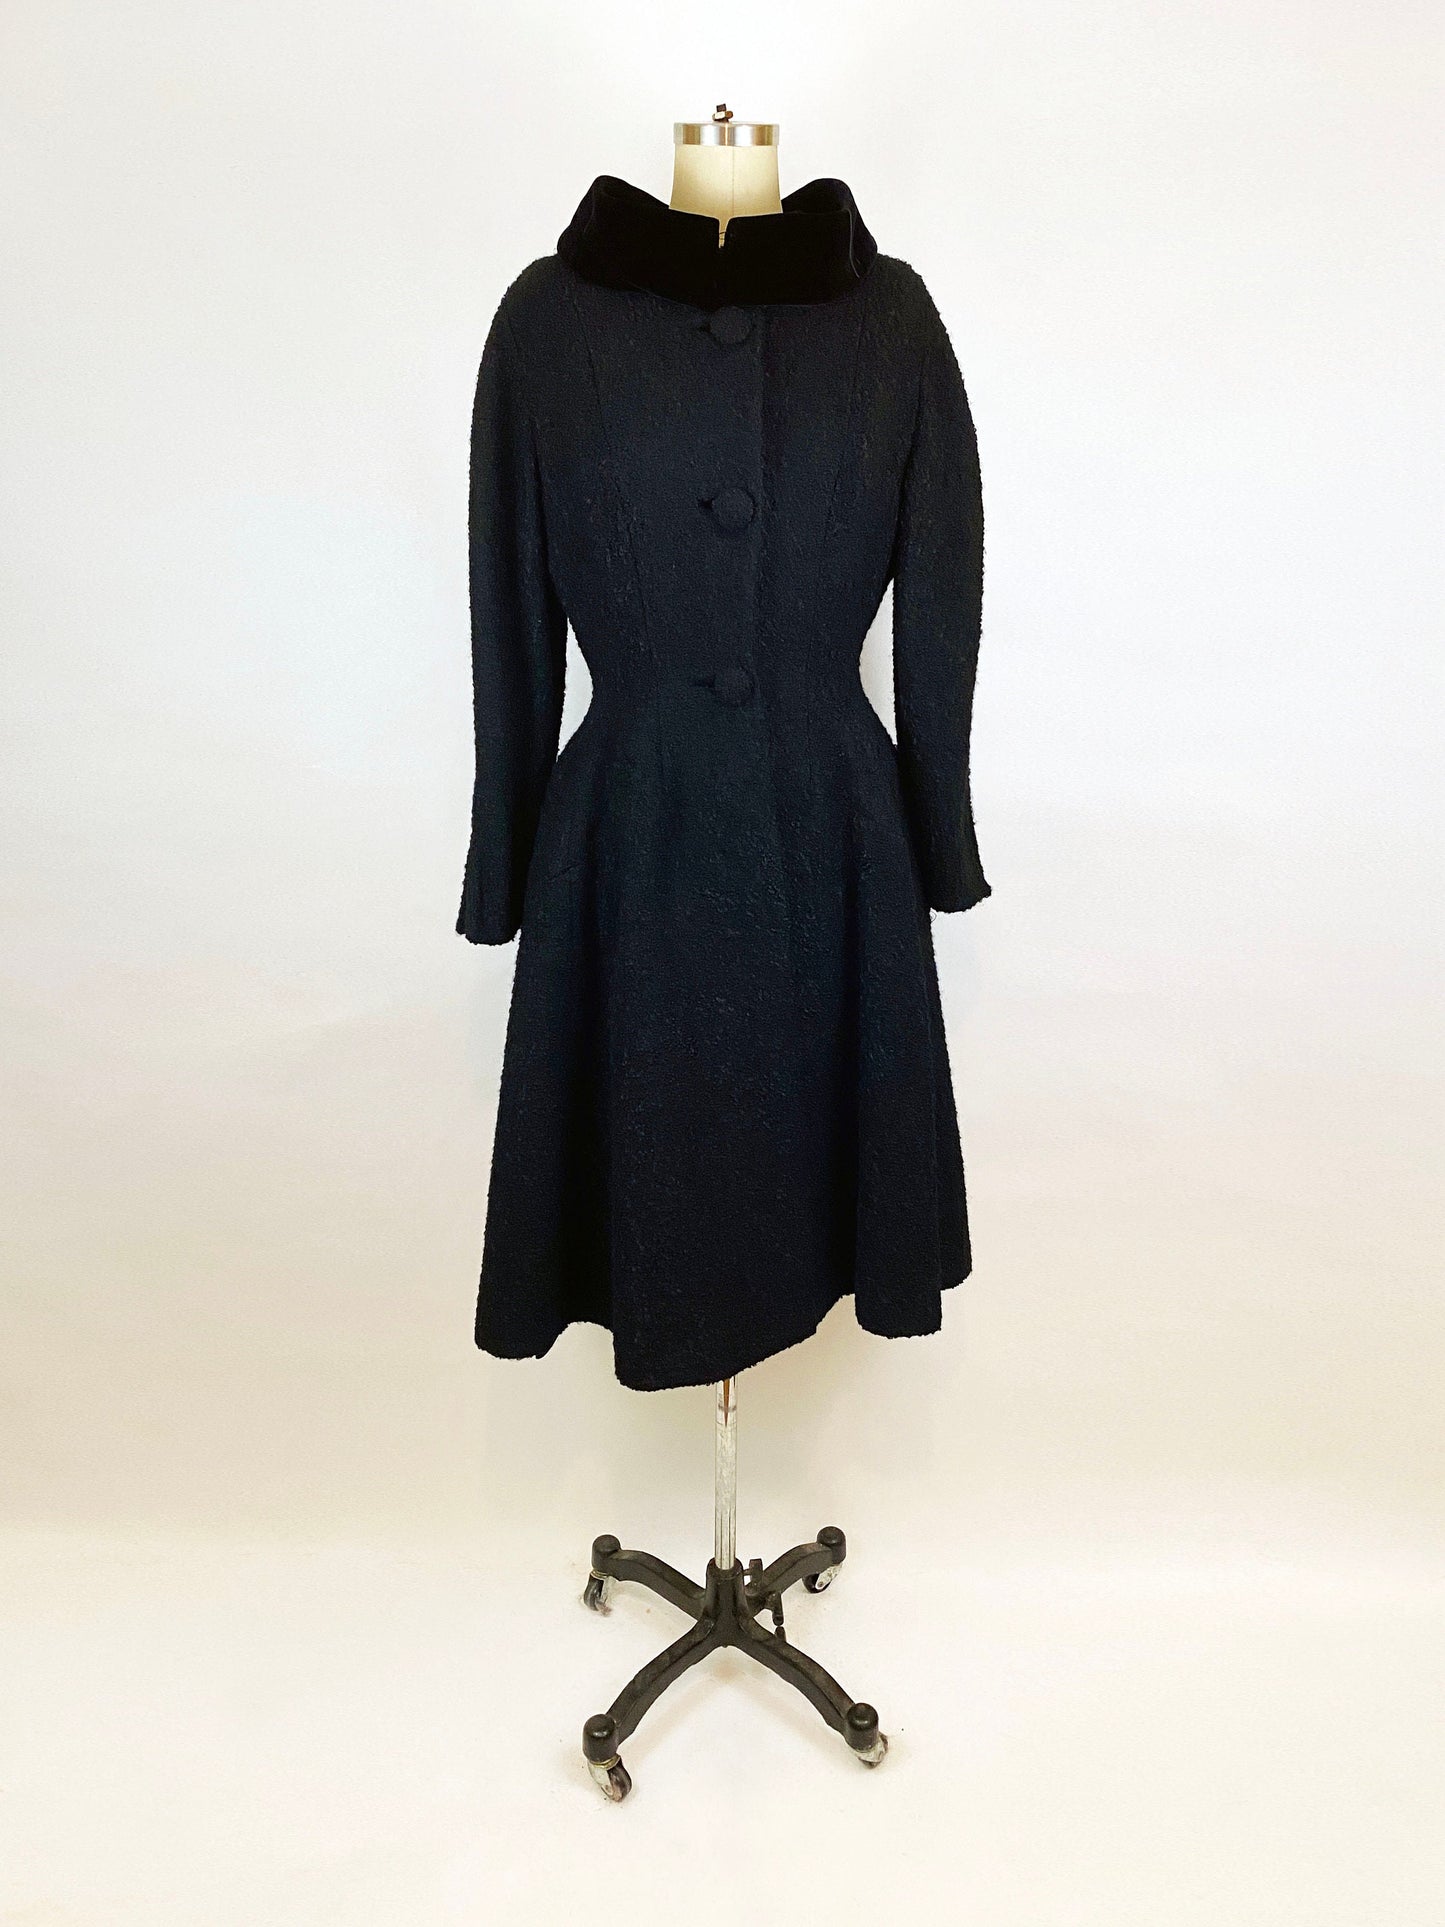 1950-1960's Lilli Ann Black Wool Boucle Princess Coat 60s Vintage Fit and Flare Jacket Hourglass Figure Vintage Retro / Size Medium 8/10